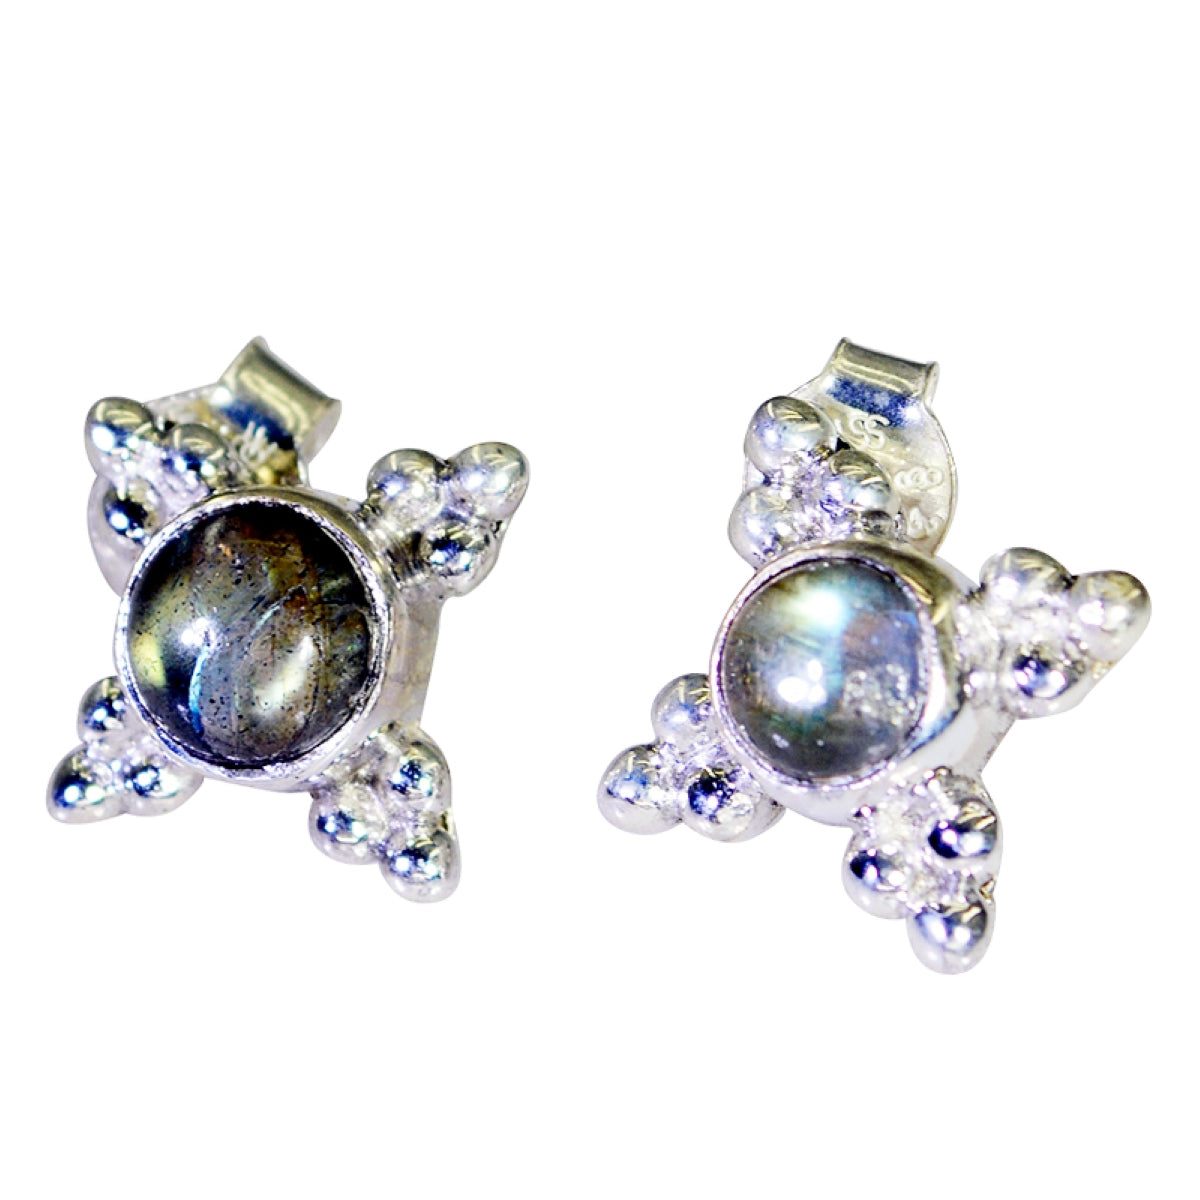 Riyo Good Gemstones round Cabochon Grey Labradorite Silver Earring gift for daughter's day